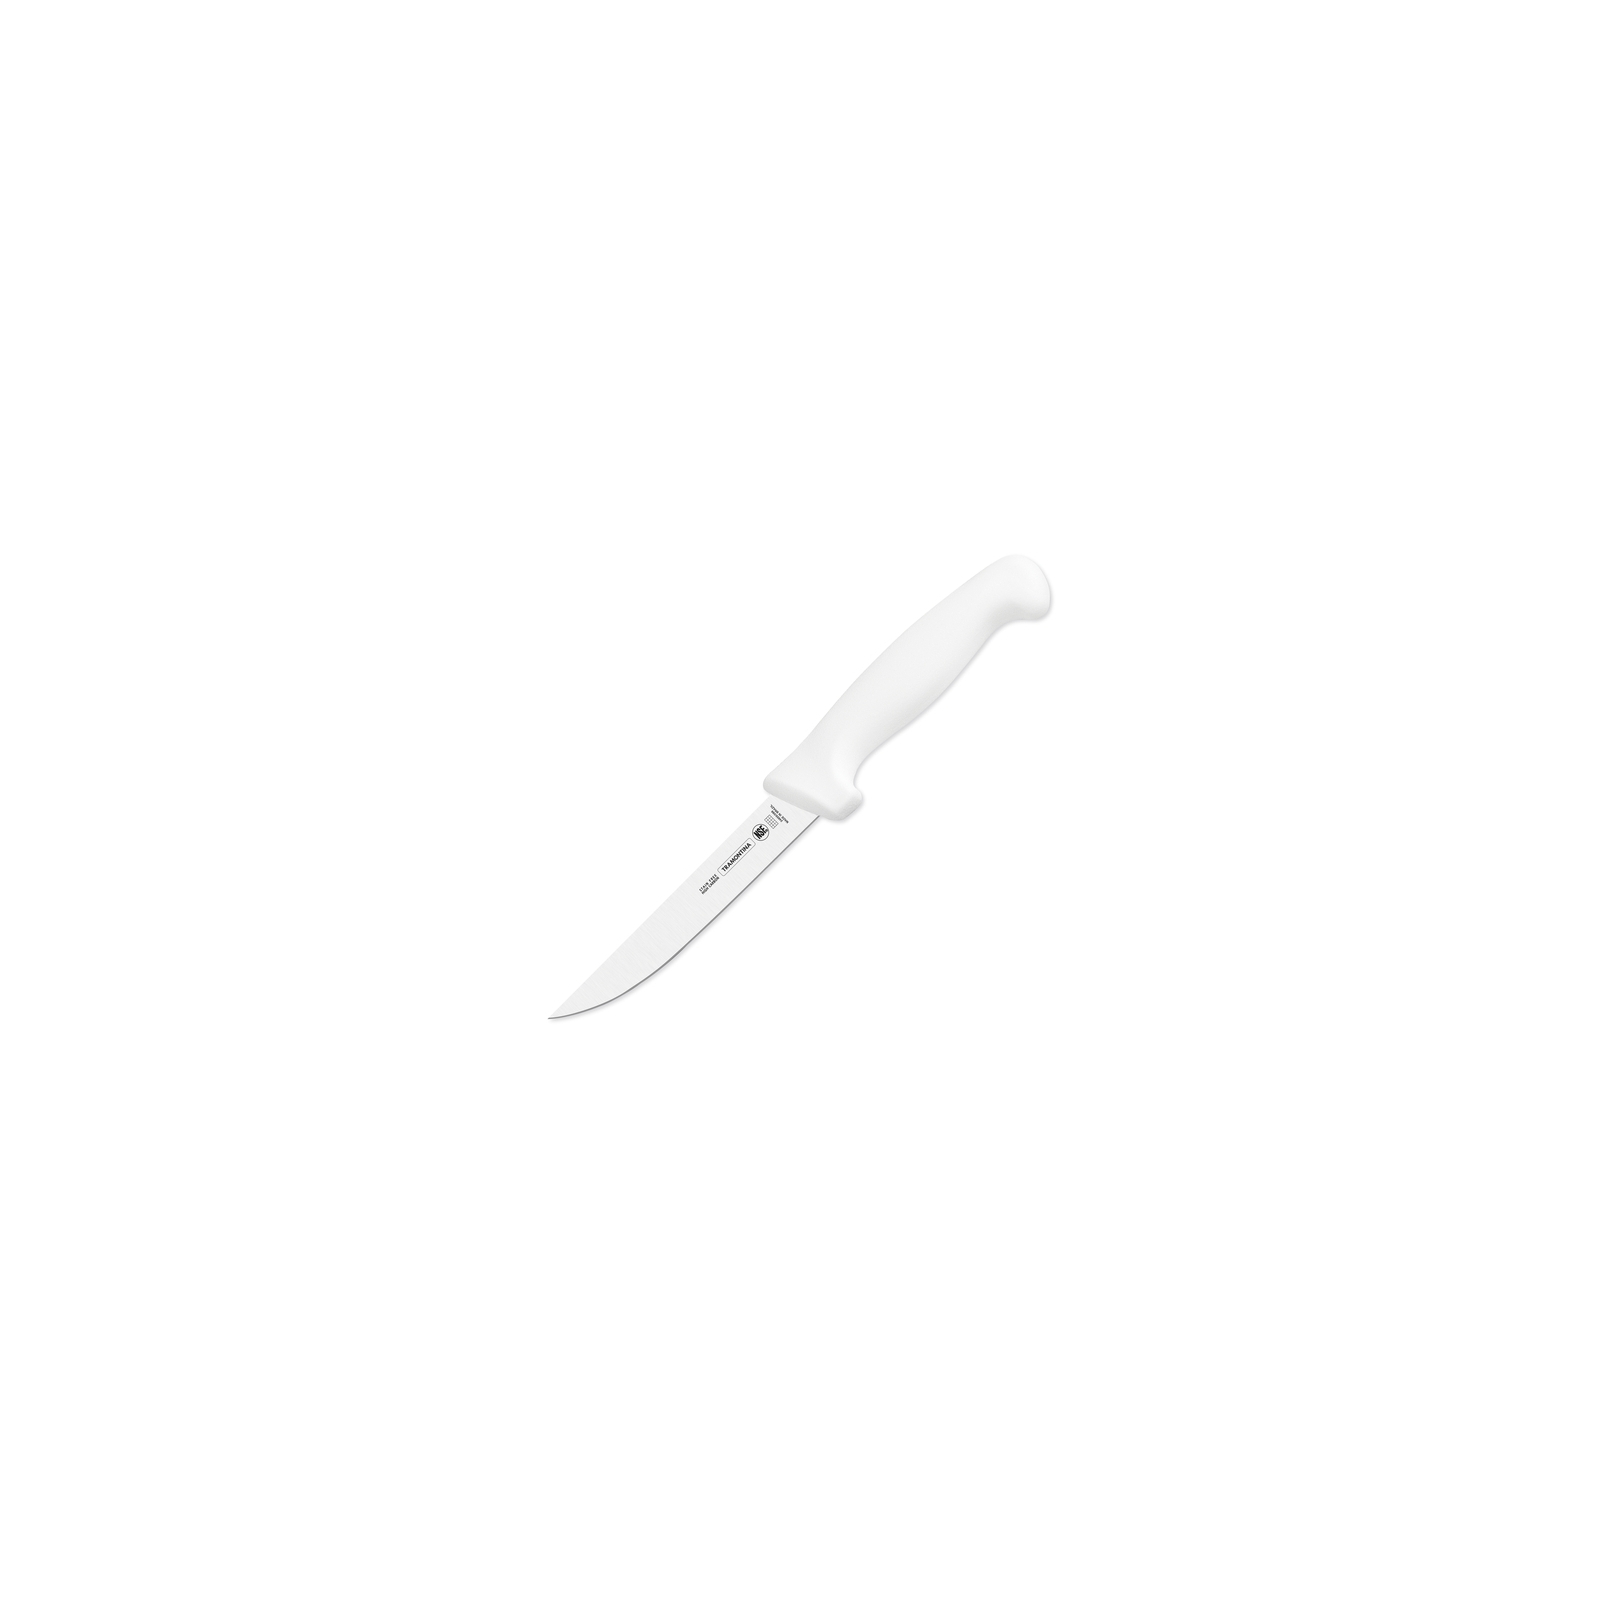 Кухонный нож Tramontina Professional Master разделочный 152 мм White (24655/086)